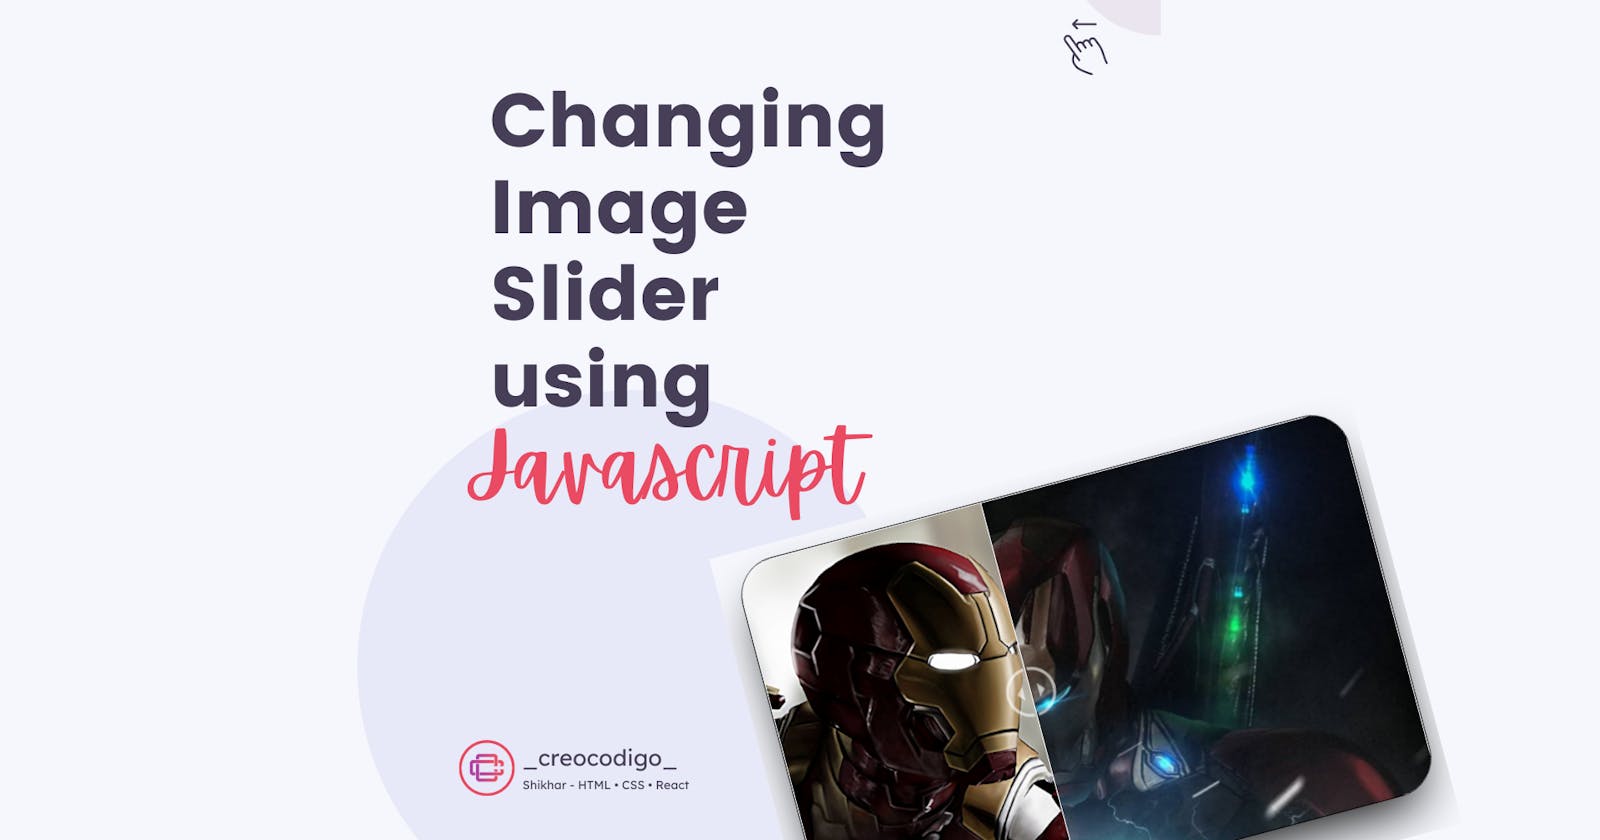 Changing Image Slider using JavaScript